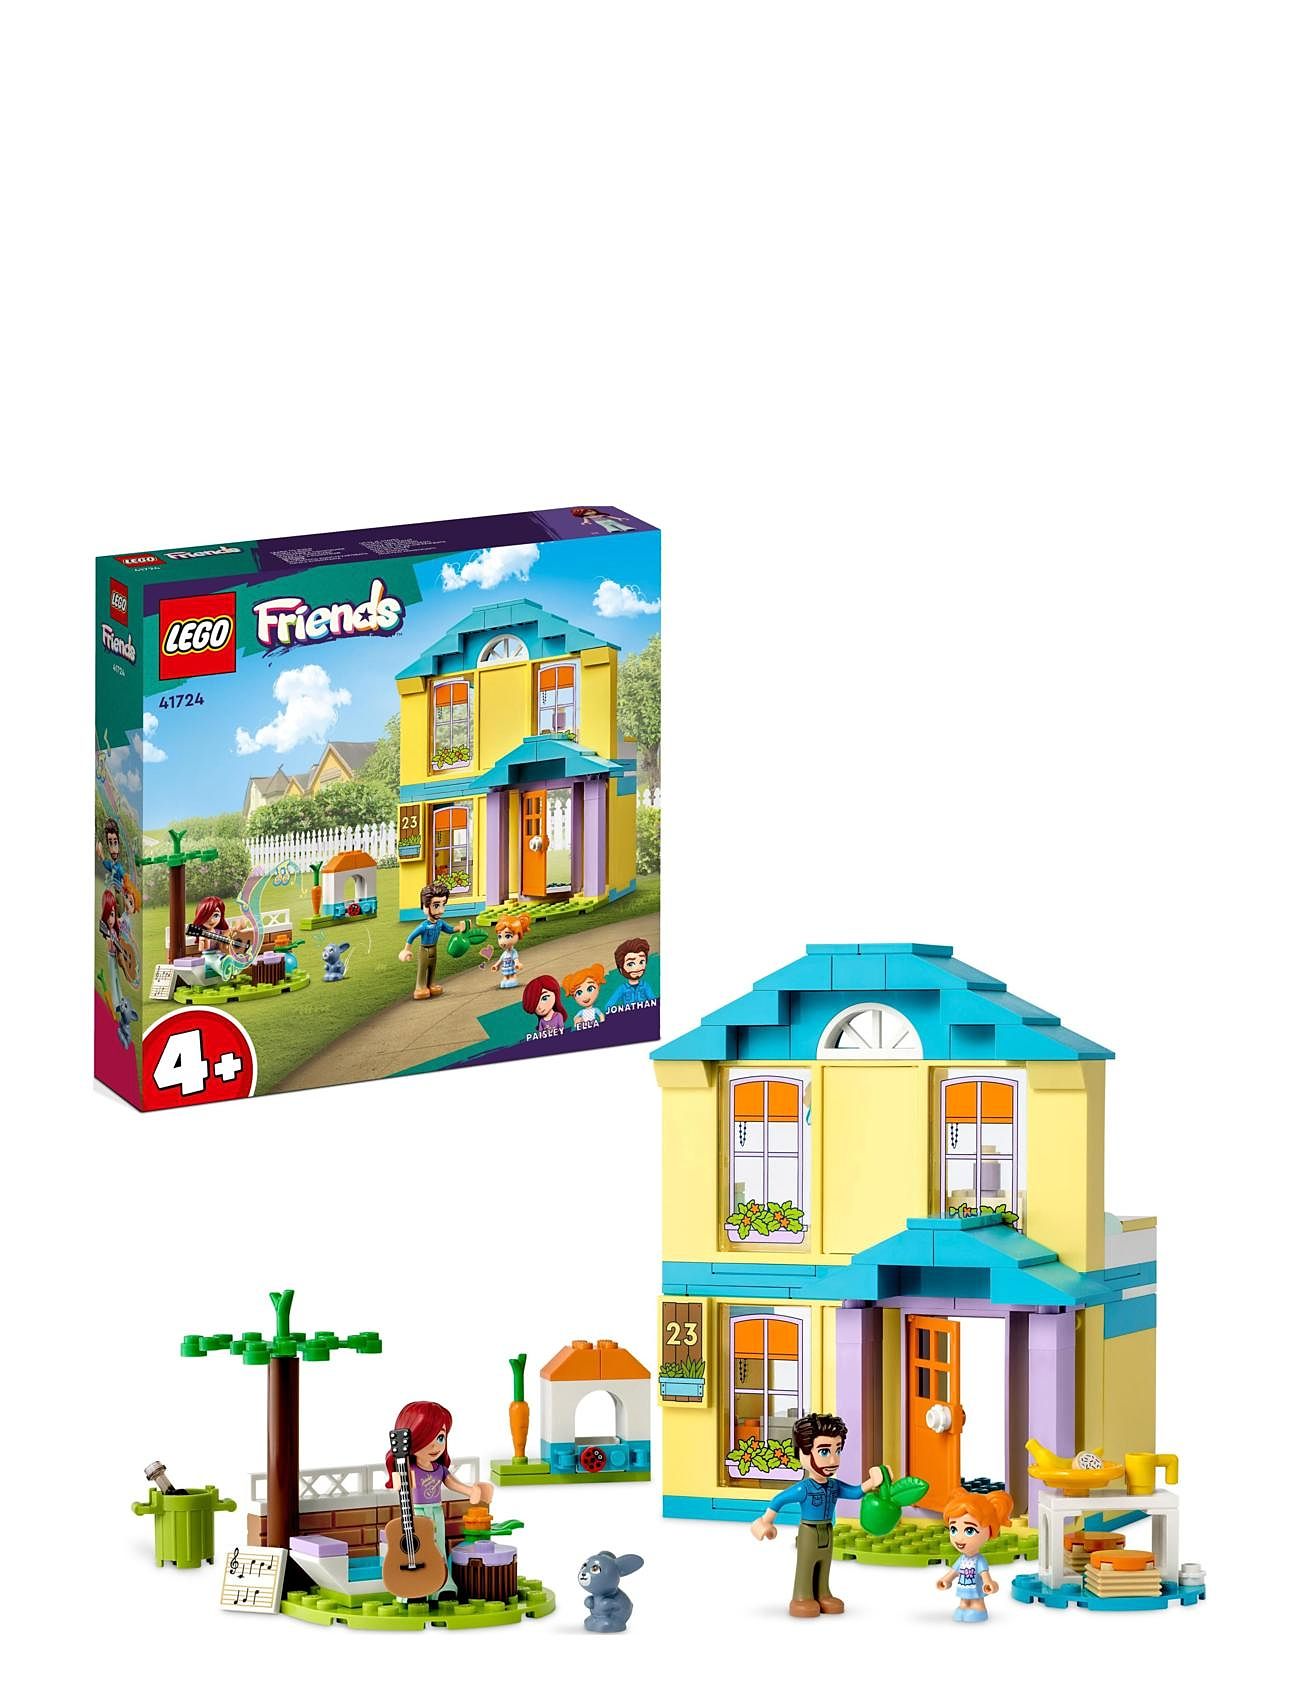 LEGO "Paisley's House 4+ Set With Mini-Dolls Toys Lego friends Multi/patterned LEGO"